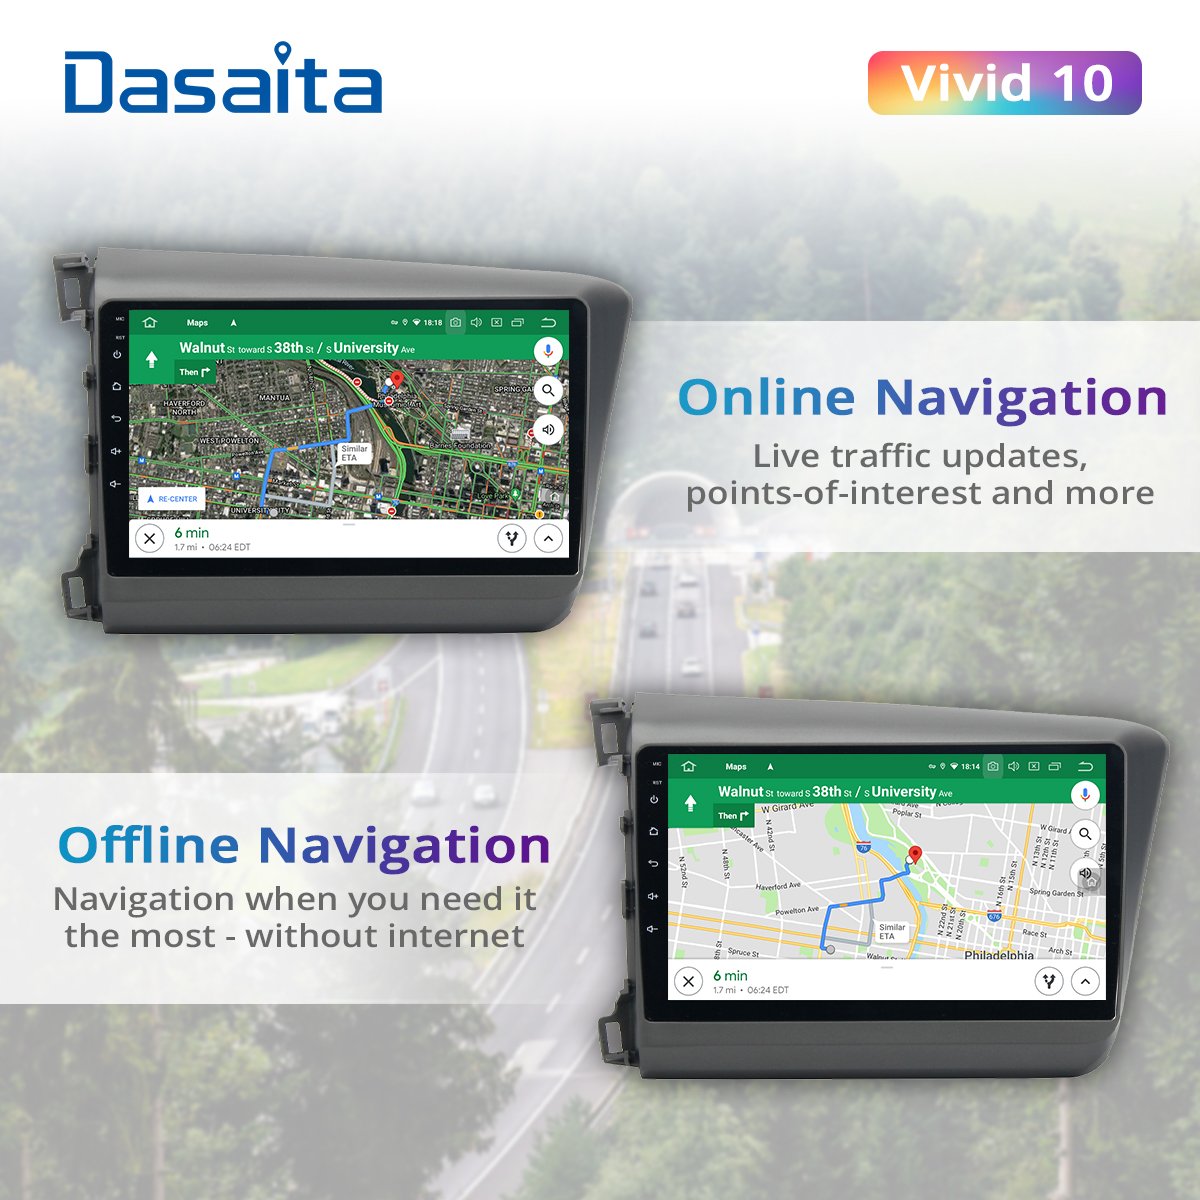 Dasaita Vivid for Honda Civic GPS 2012 2013 2014 Car Multimedia Player 1 Din 9" IPS Android 10.0 Radio Navigation Autoradio